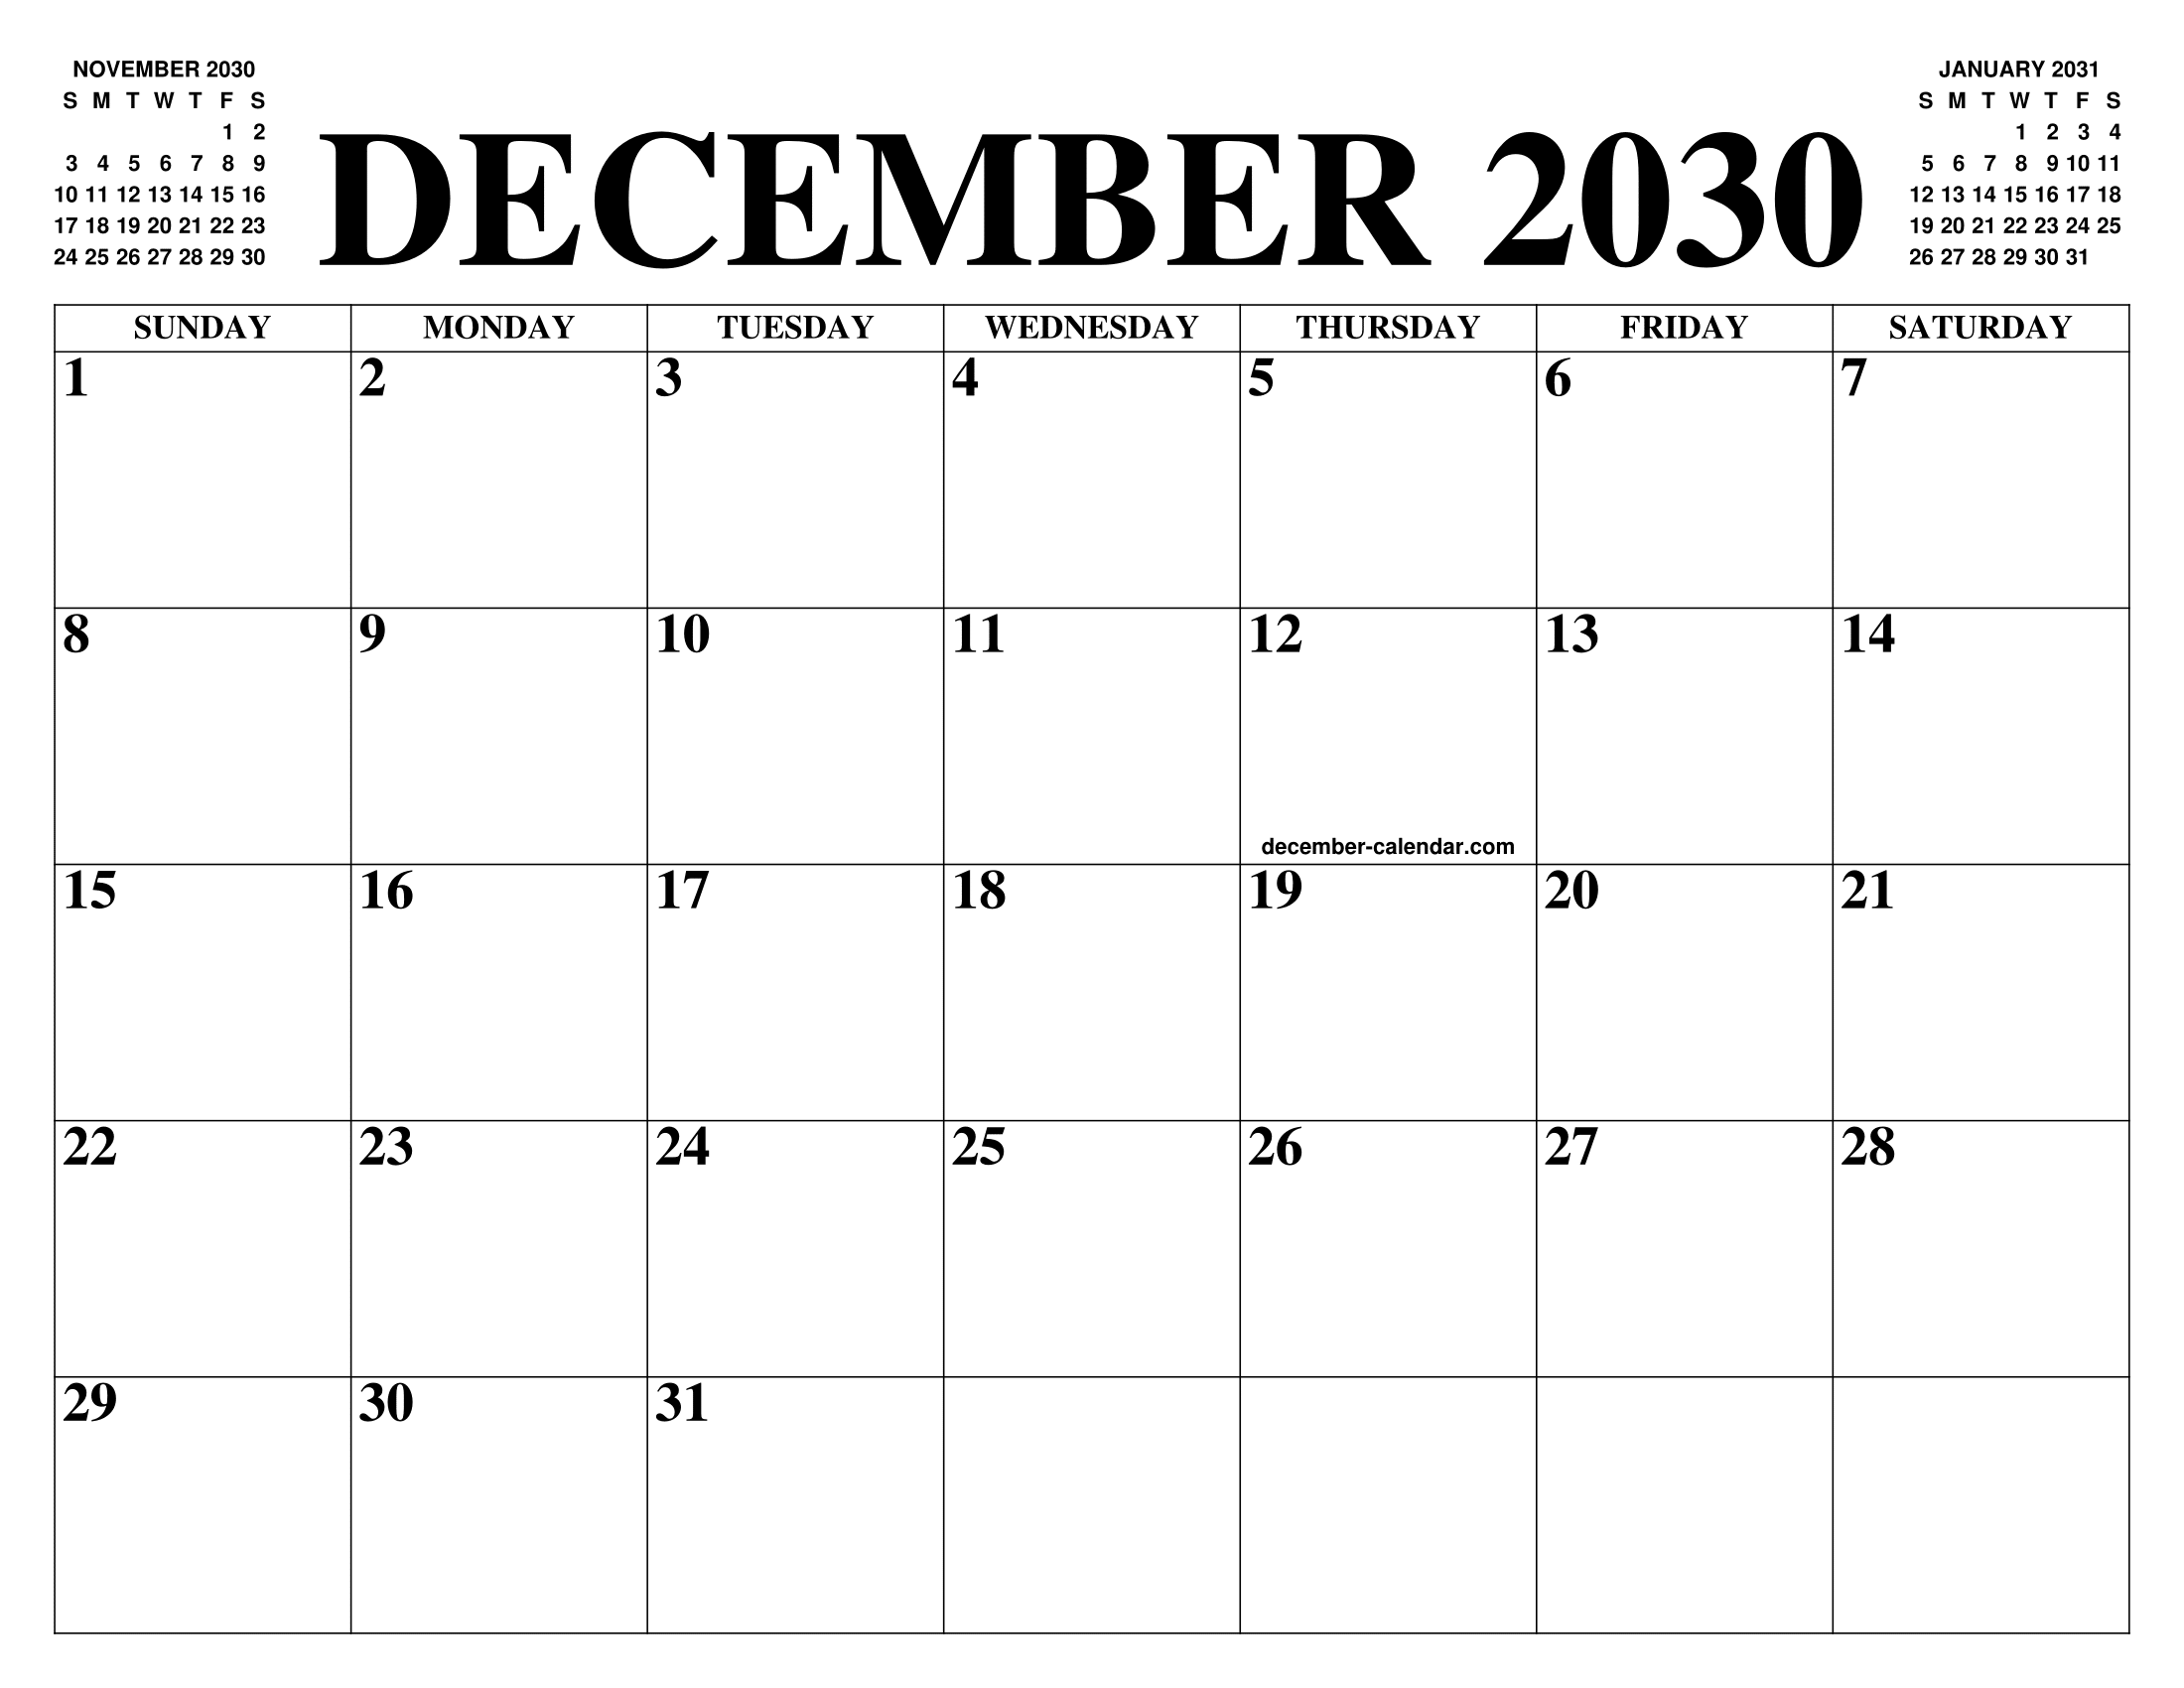 DECEMBER 2030 CALENDAR OF THE MONTH: FREE PRINTABLE DECEMBER CALENDAR